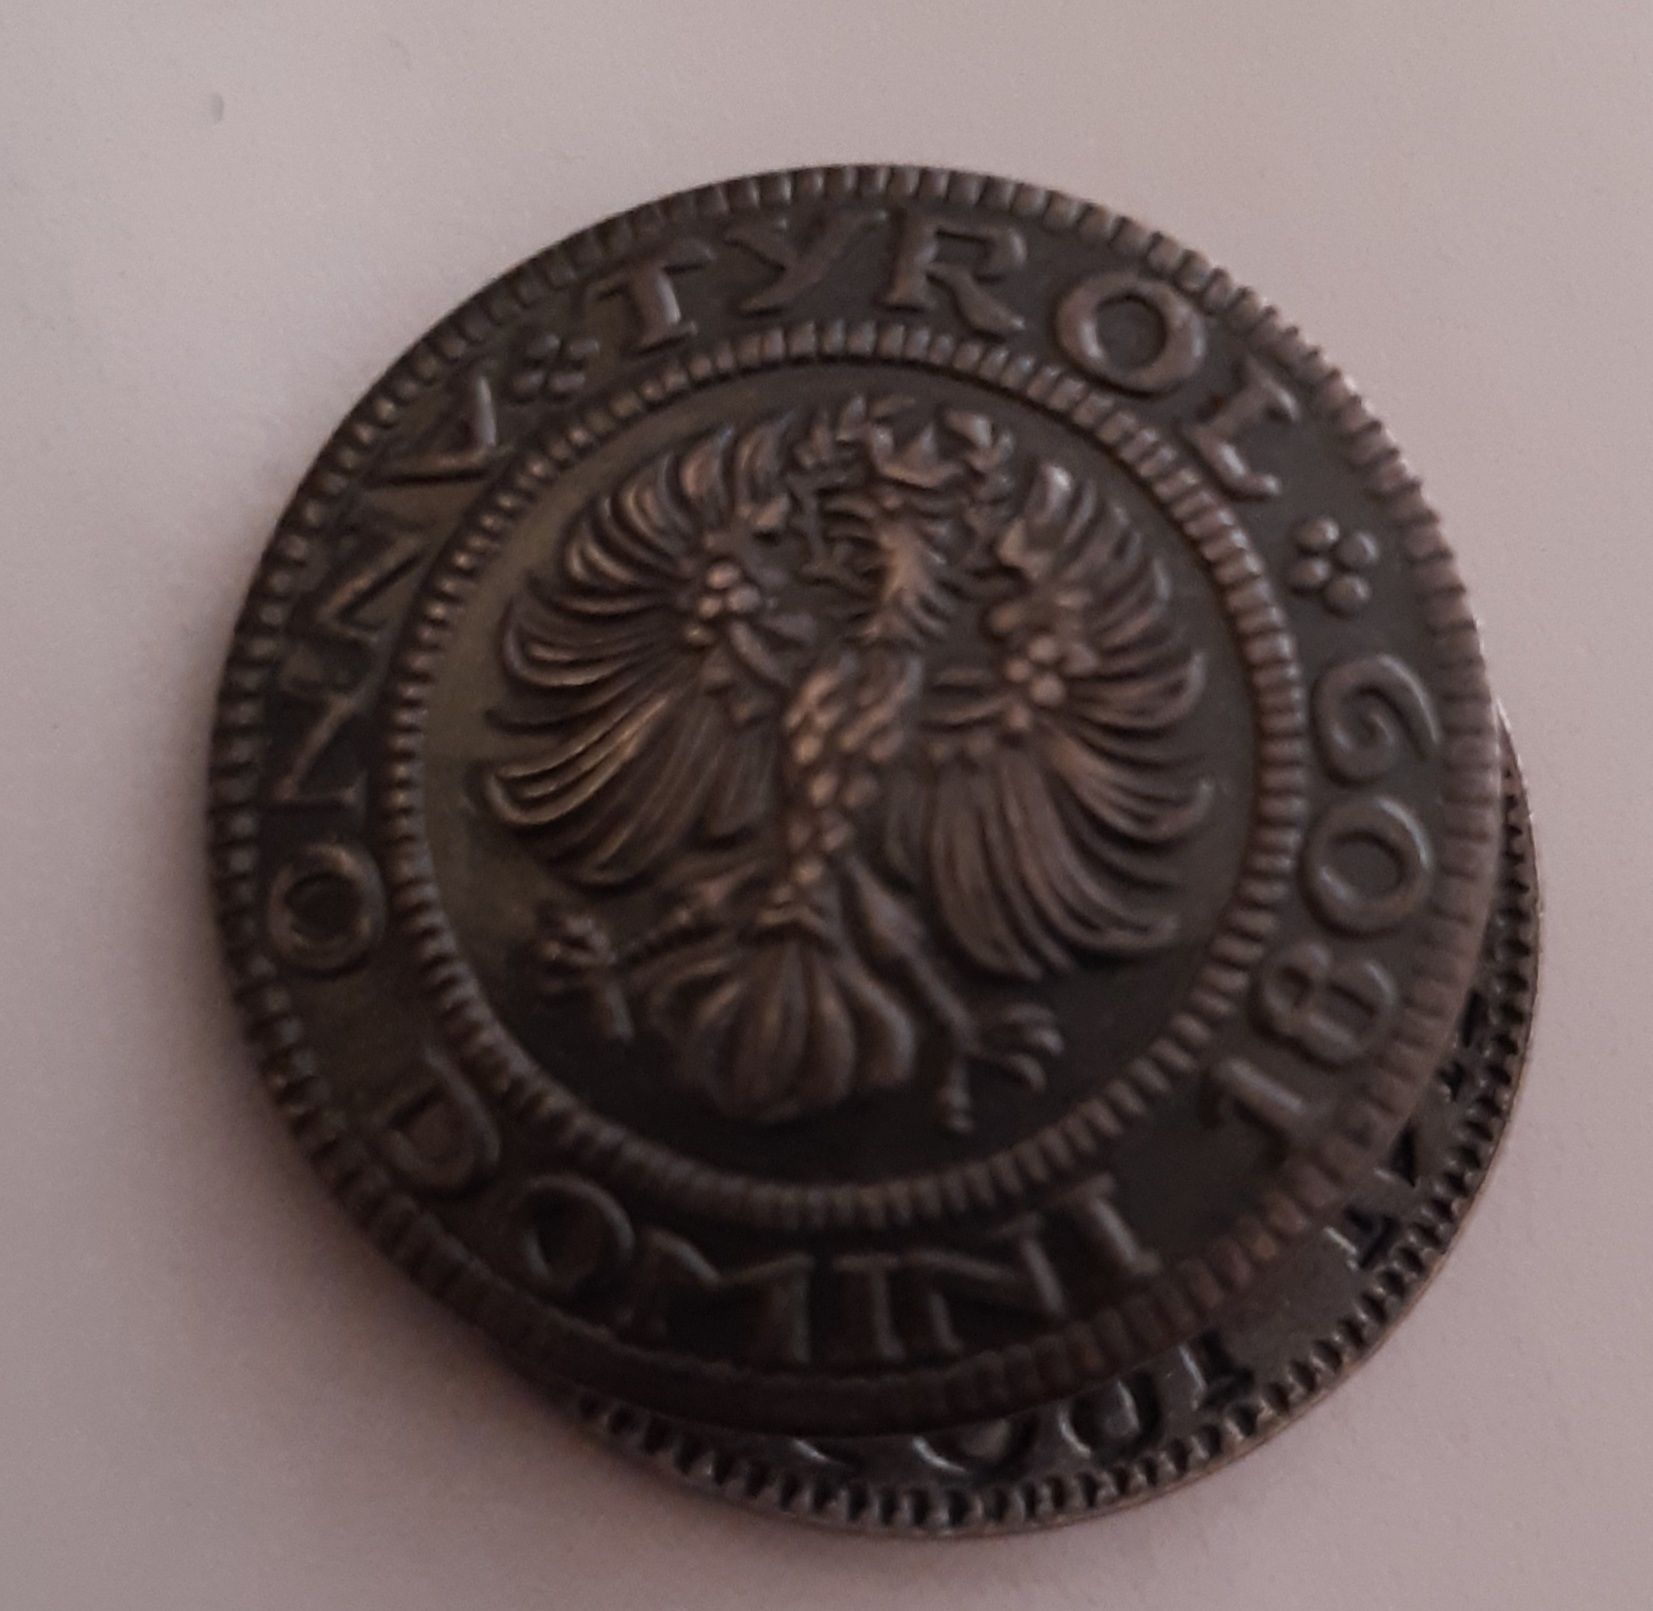 Stare Guziki - w postaci monety i innych symboli